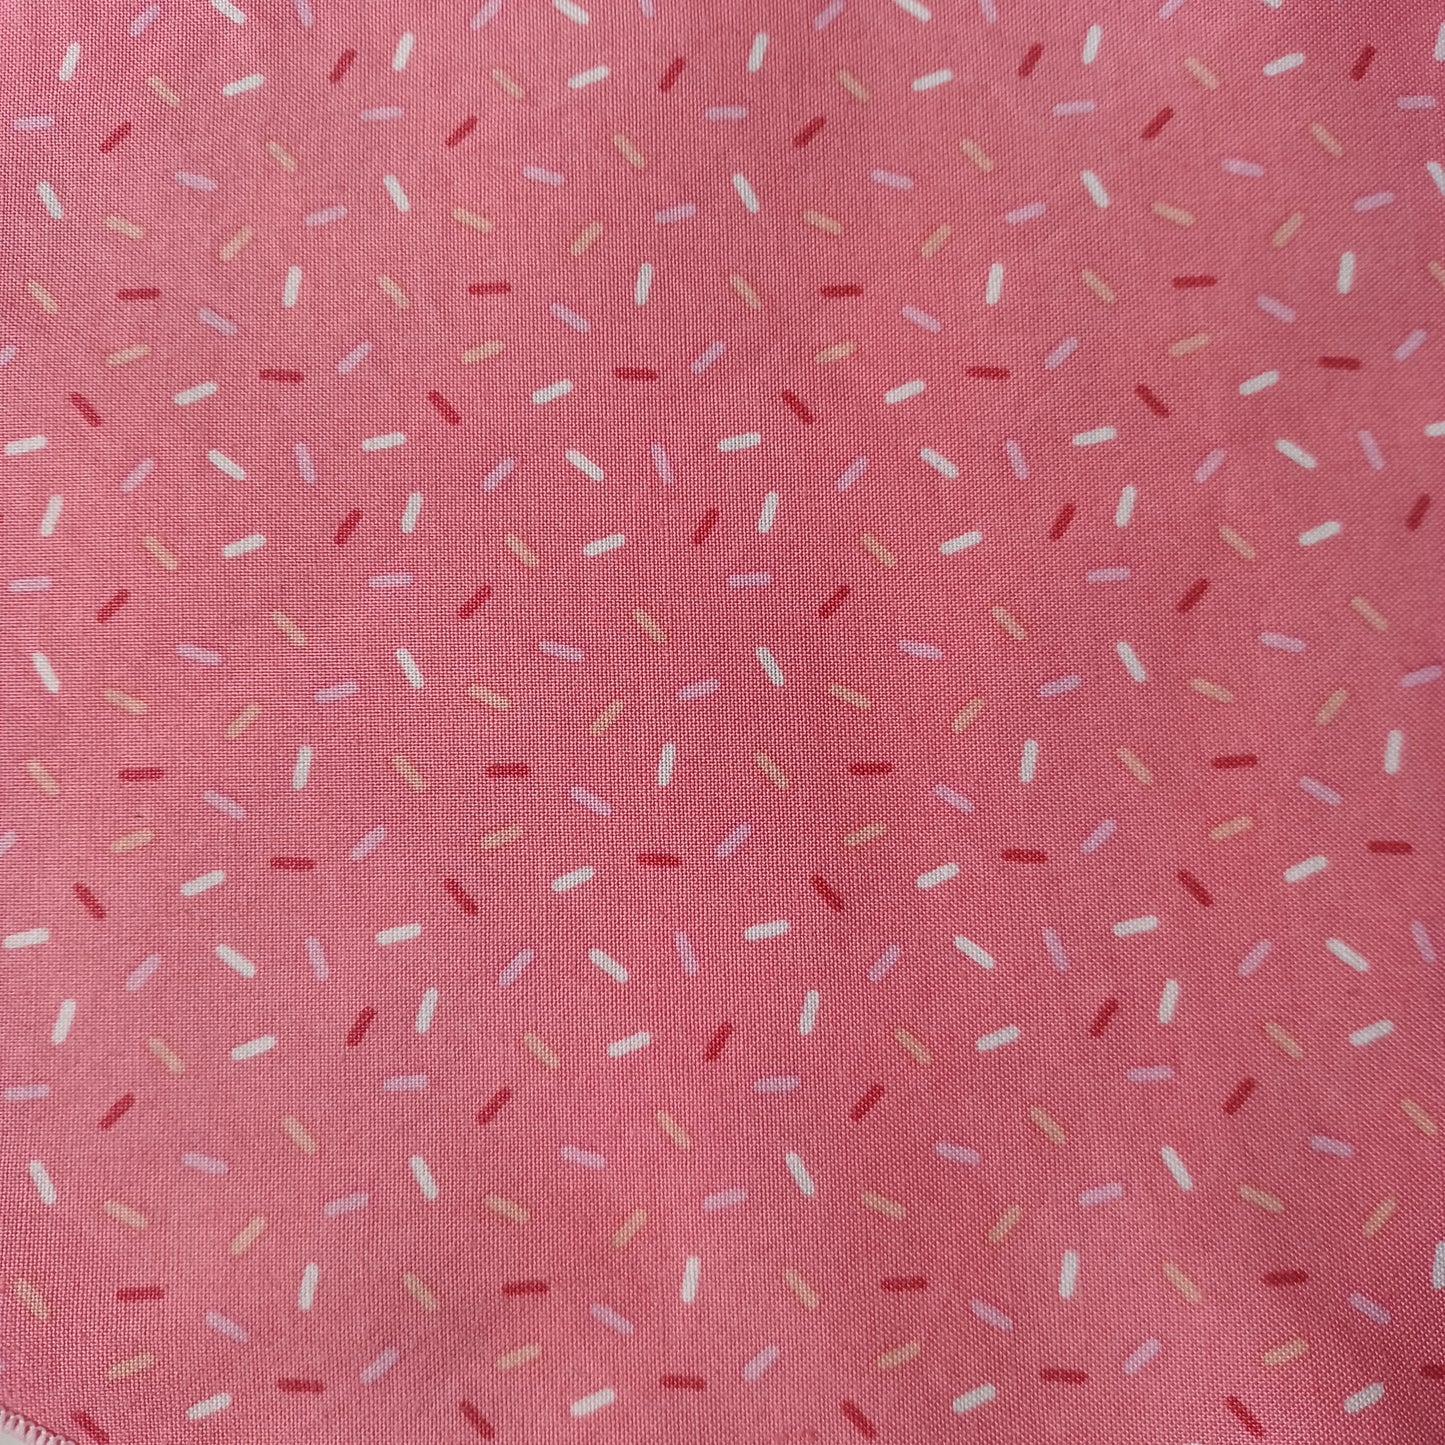 Bavoir-foulard pour bébé-Rose avec bonbons roses et blancs/Baby bib-Scarf-Pink with pink and white candies 0-36 mois